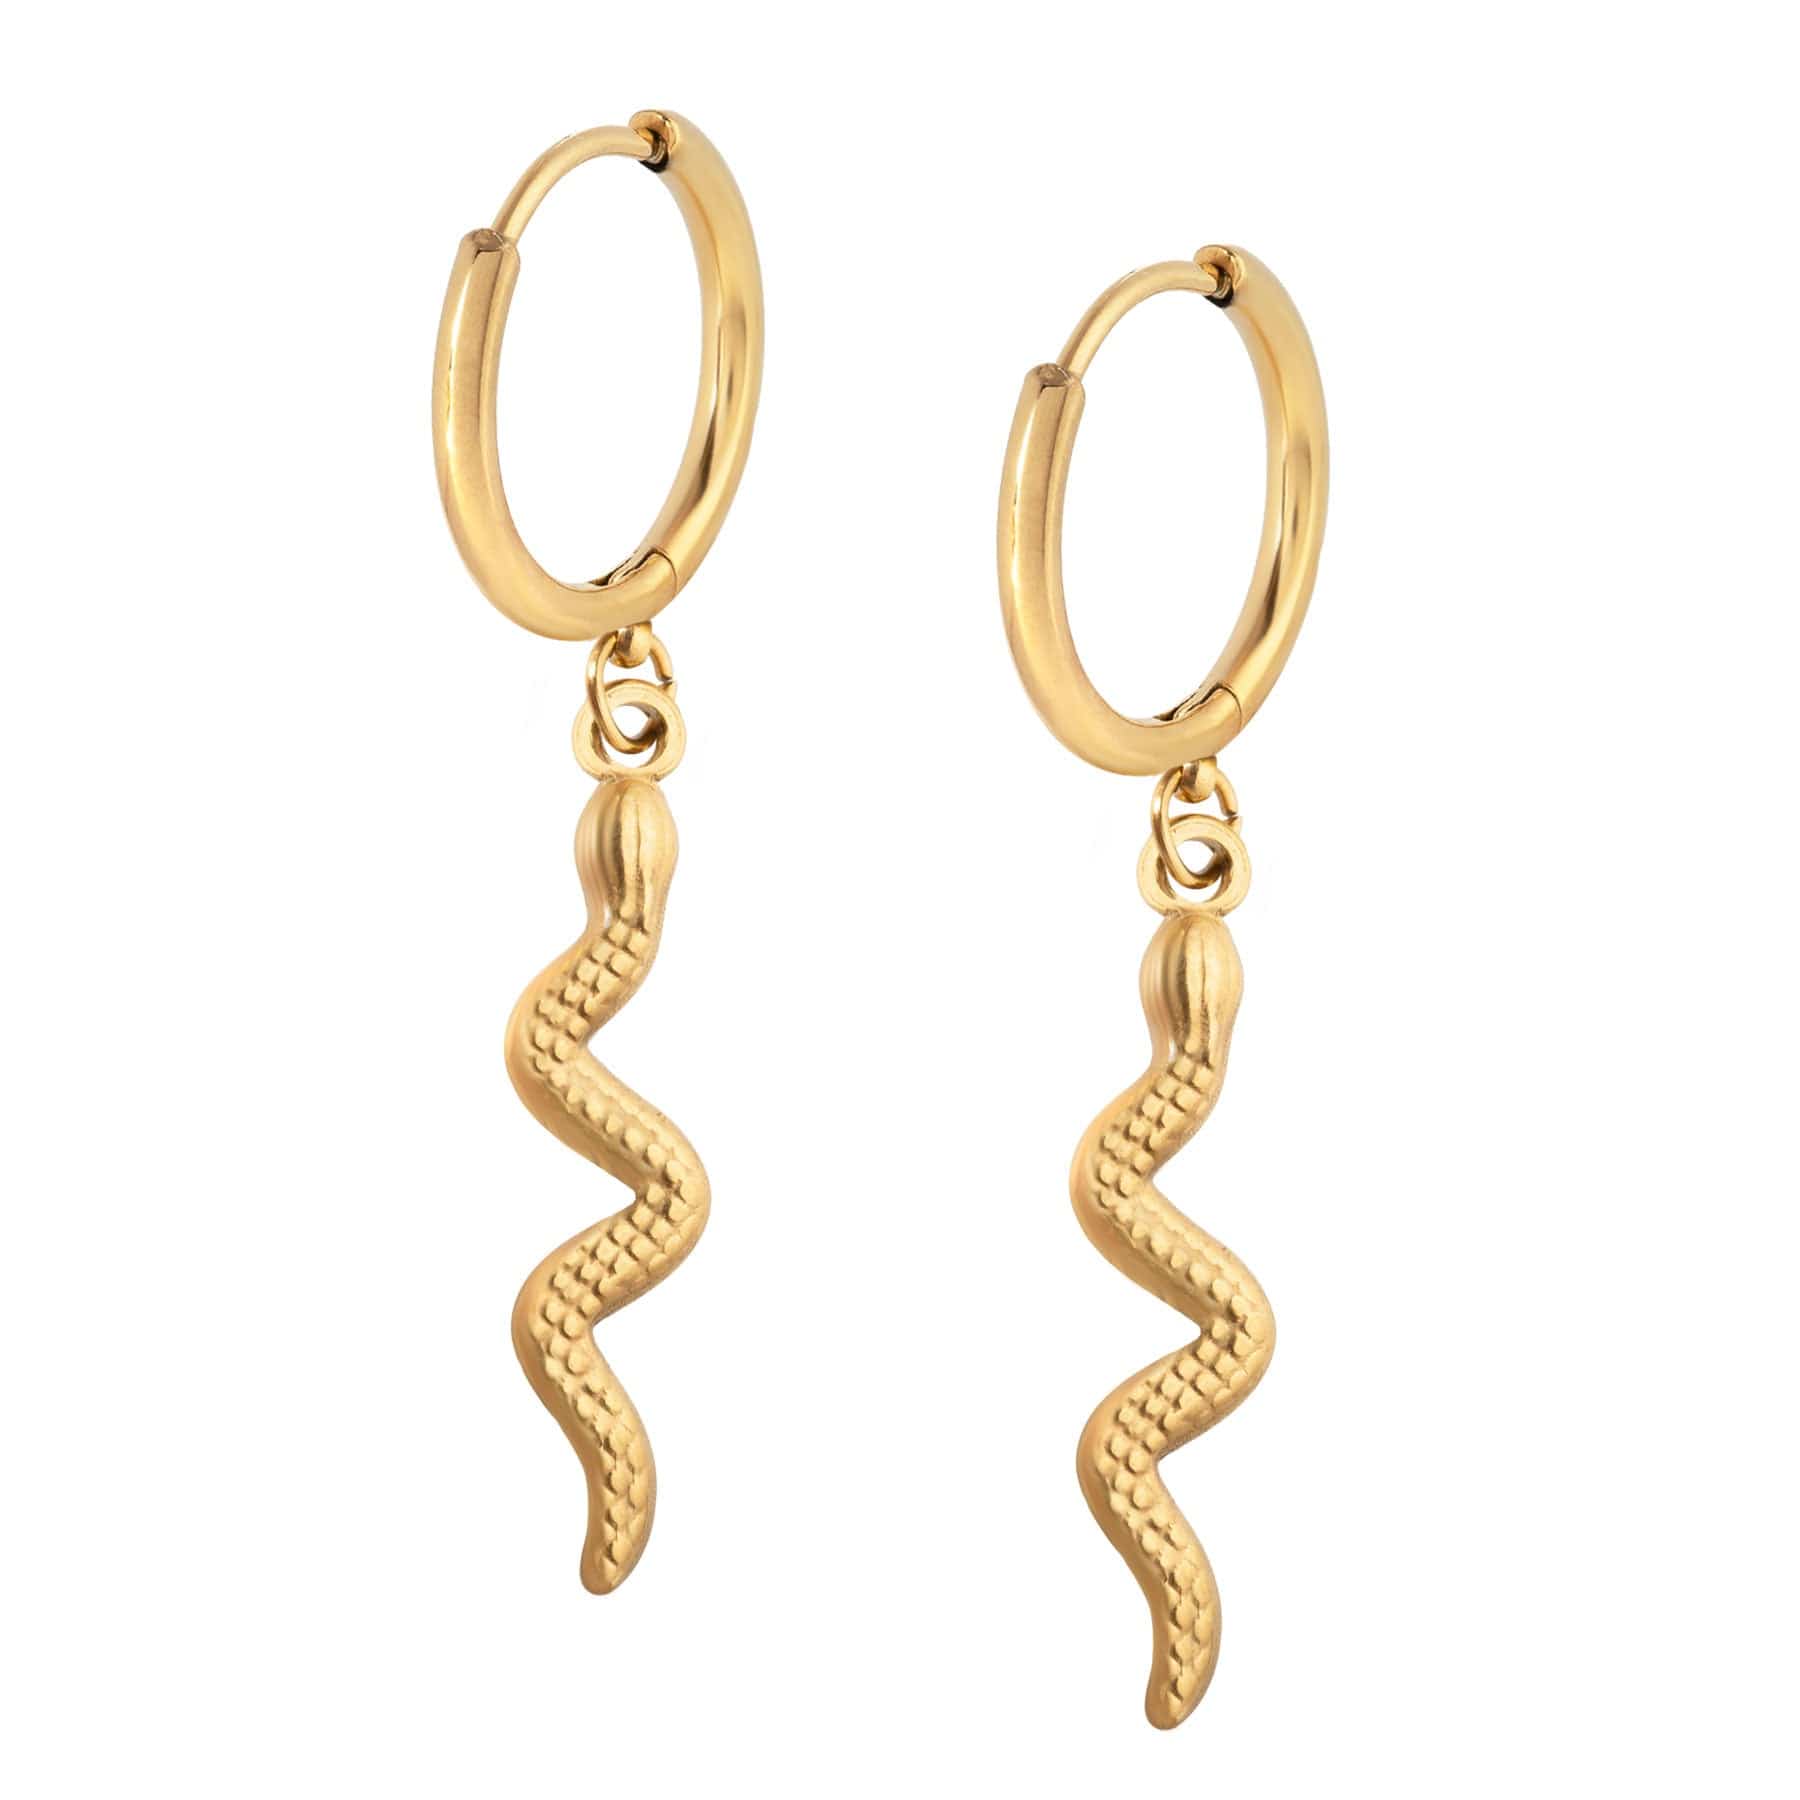 BOHOMOON Stainless Steel Seville Snake Hoop Earrings Gold